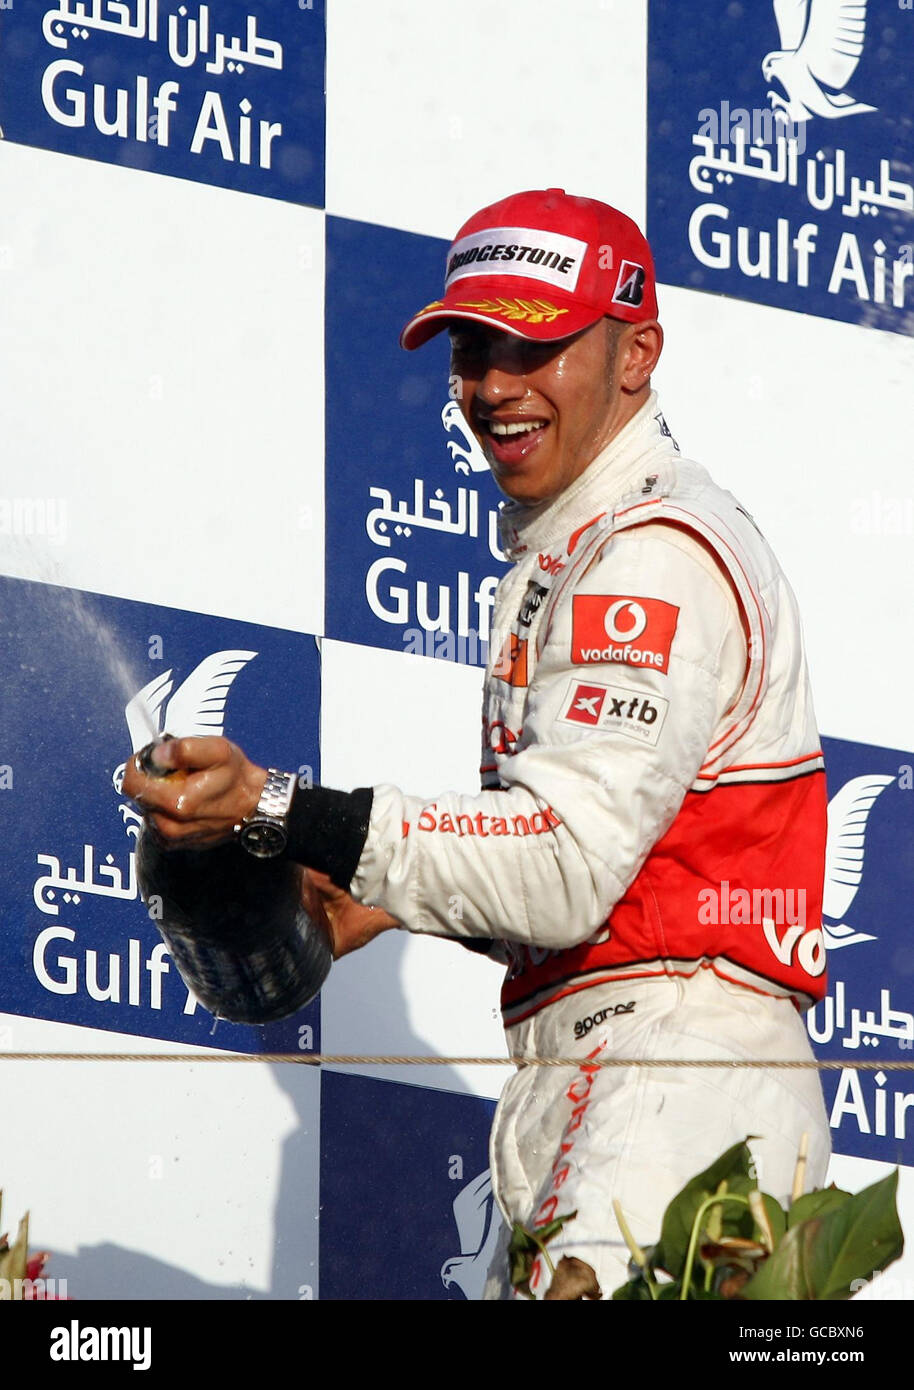 Lewis Hamilton di McLaren festeggia il suo terzo posto durante il Gulf Air Bahrain Grand Prix al Bahrain International Circuit di Sakhir, Bahrain. Foto Stock